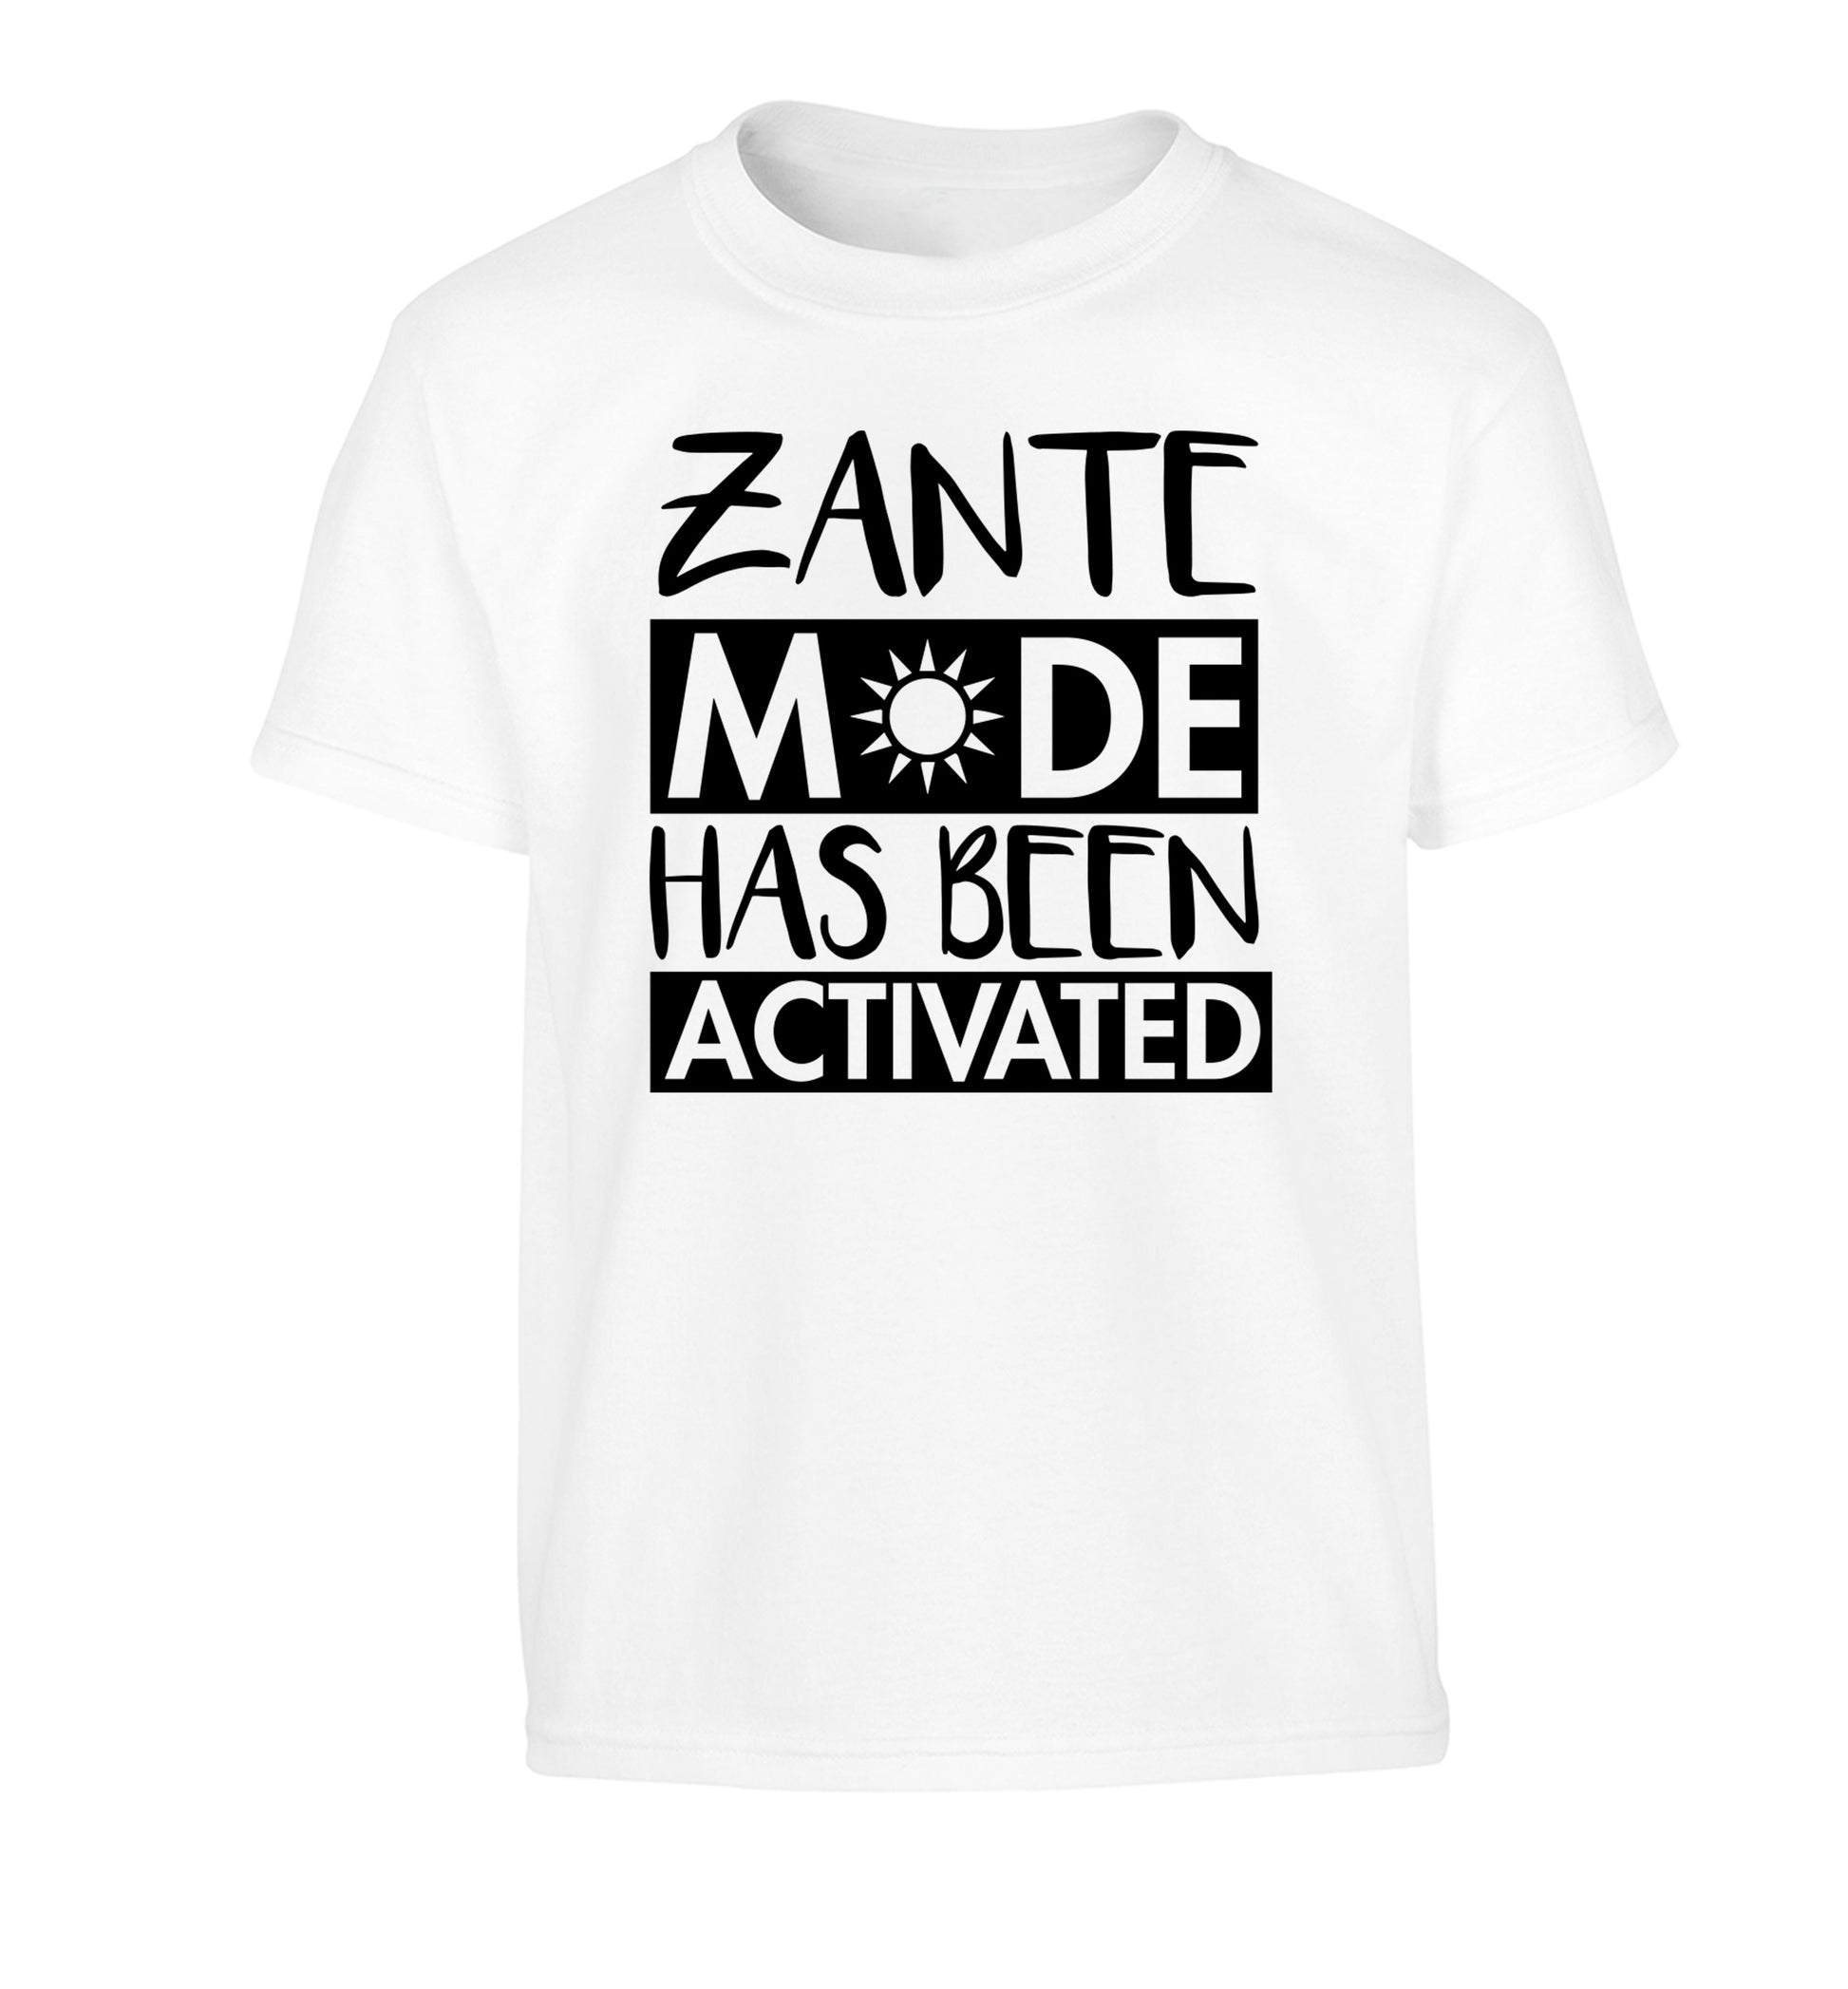 Zante mode has been activated Children's white Tshirt 12-13 Years